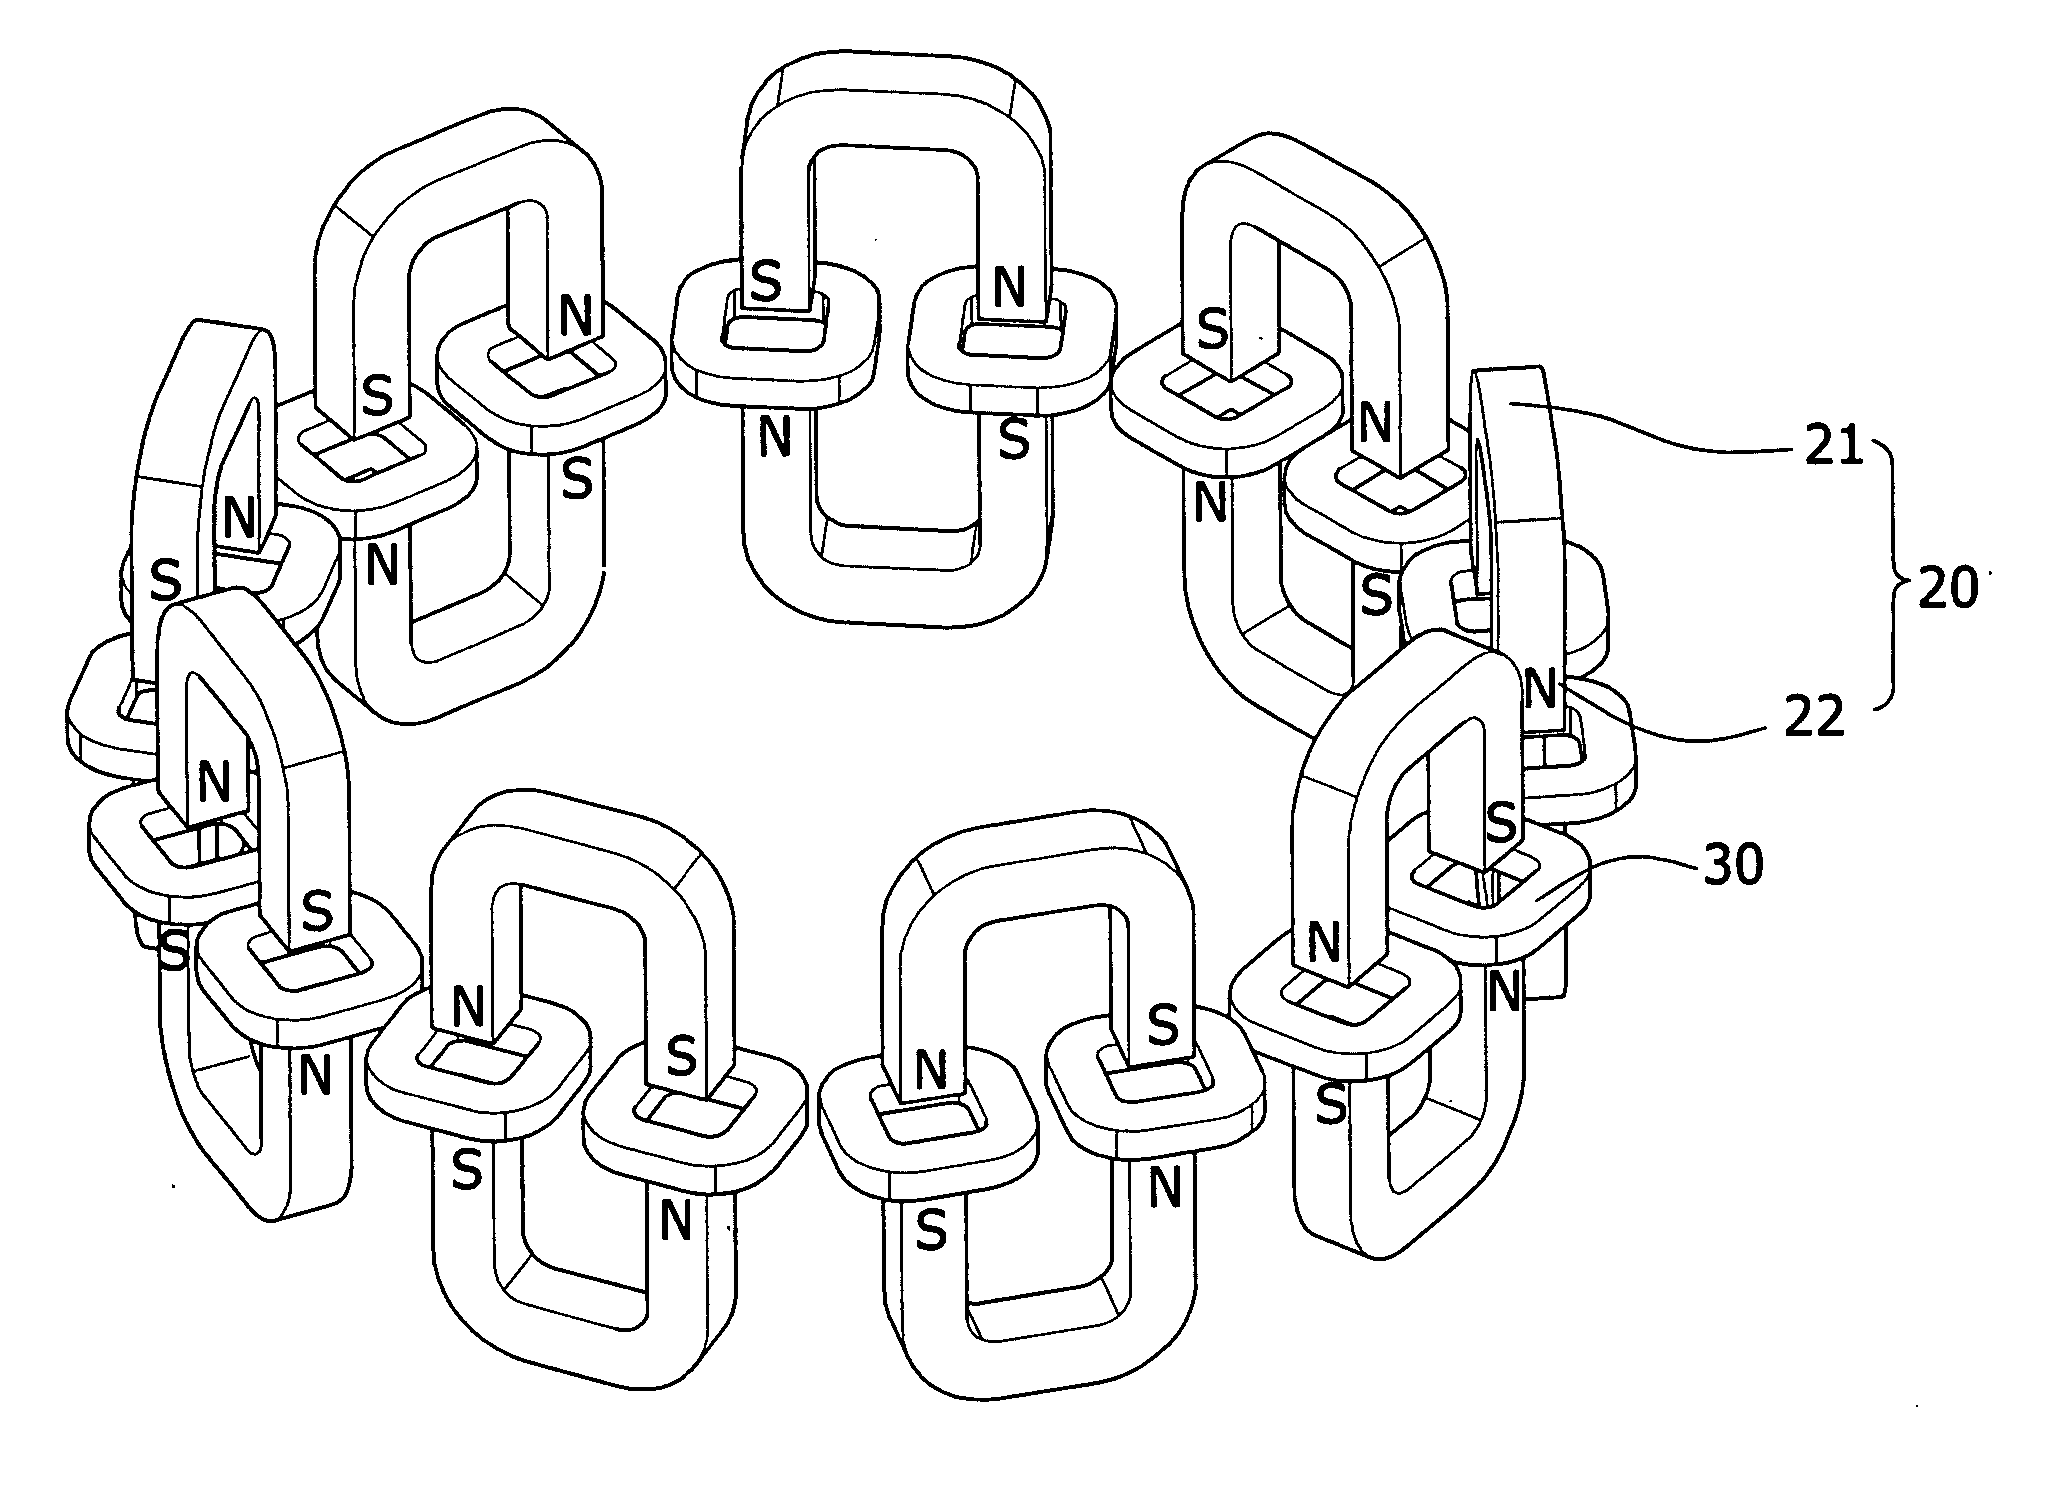 Structure of generator/motor